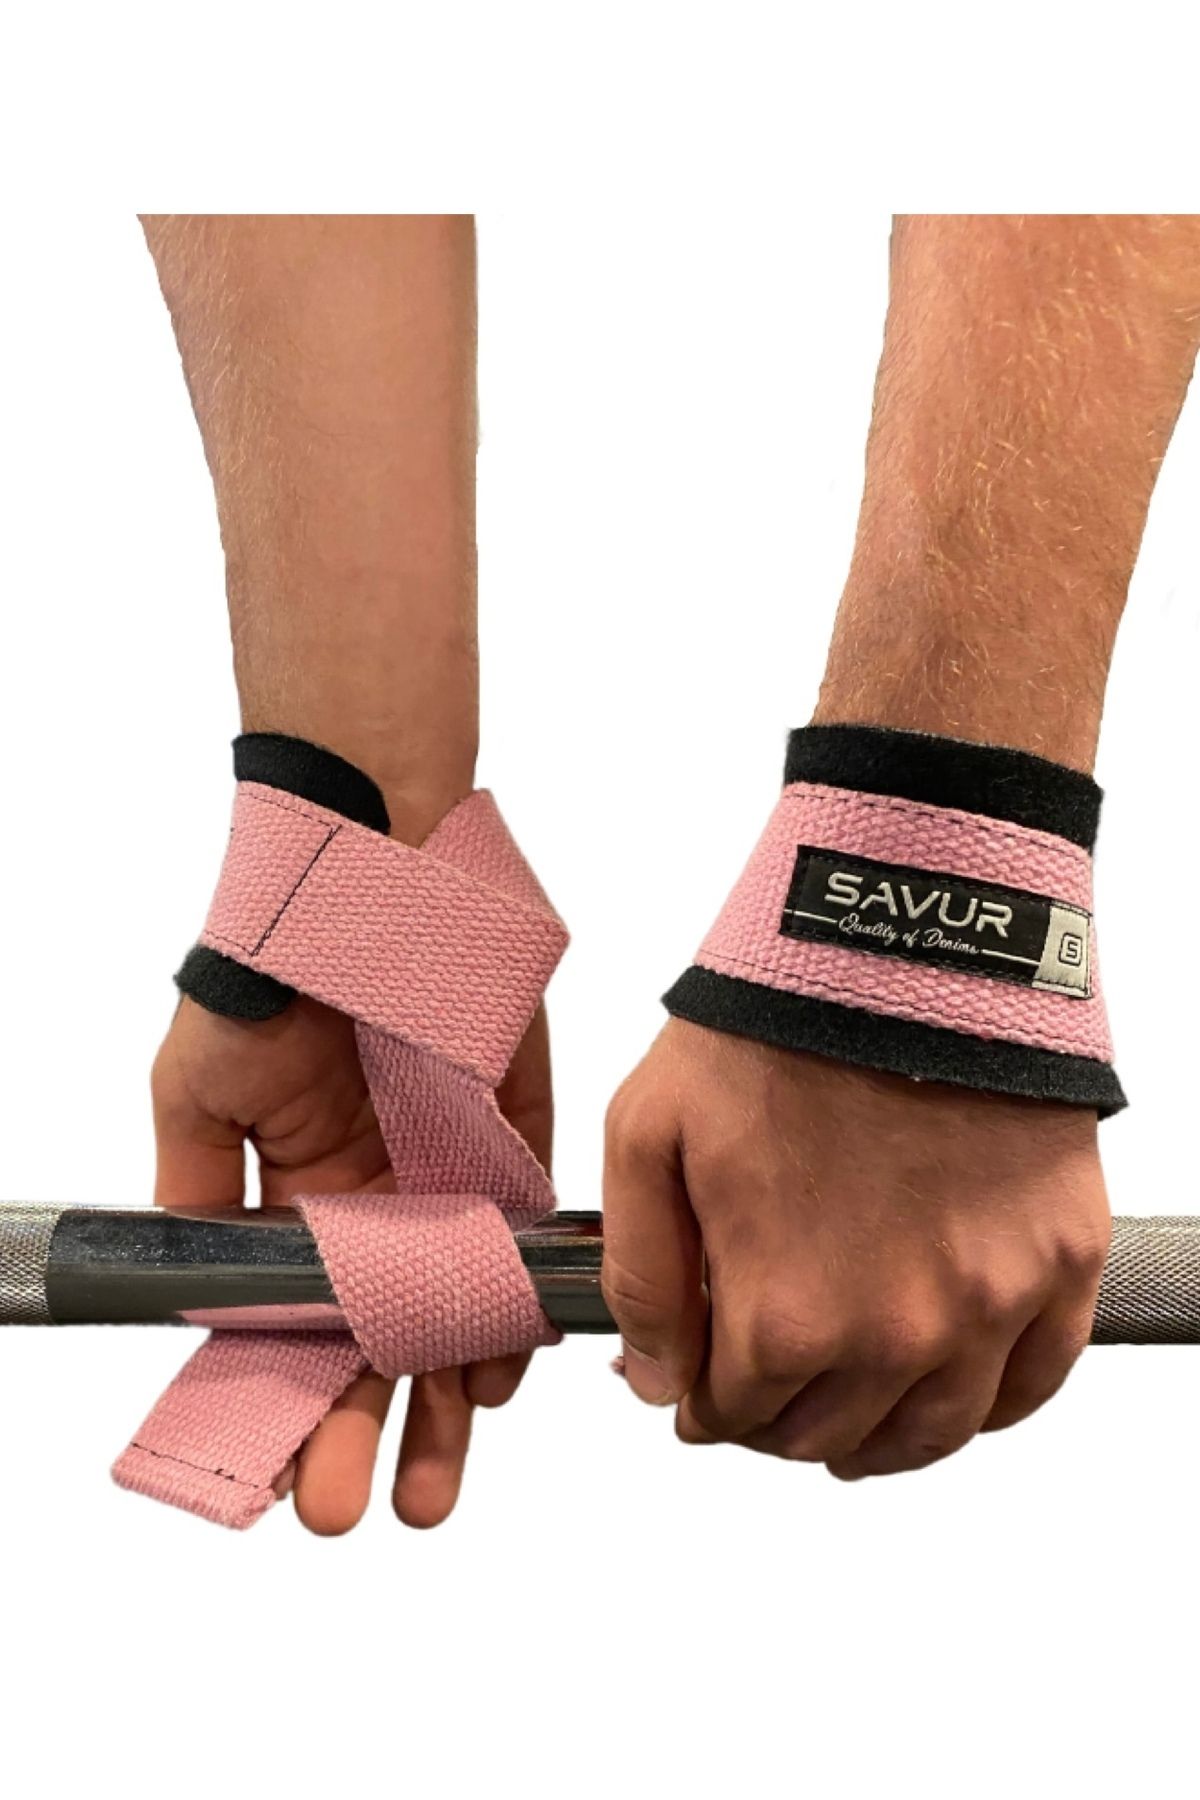 SAVUR Fitness Wrist Strap - Ağırlık Kaldırma Kayışı Pembe